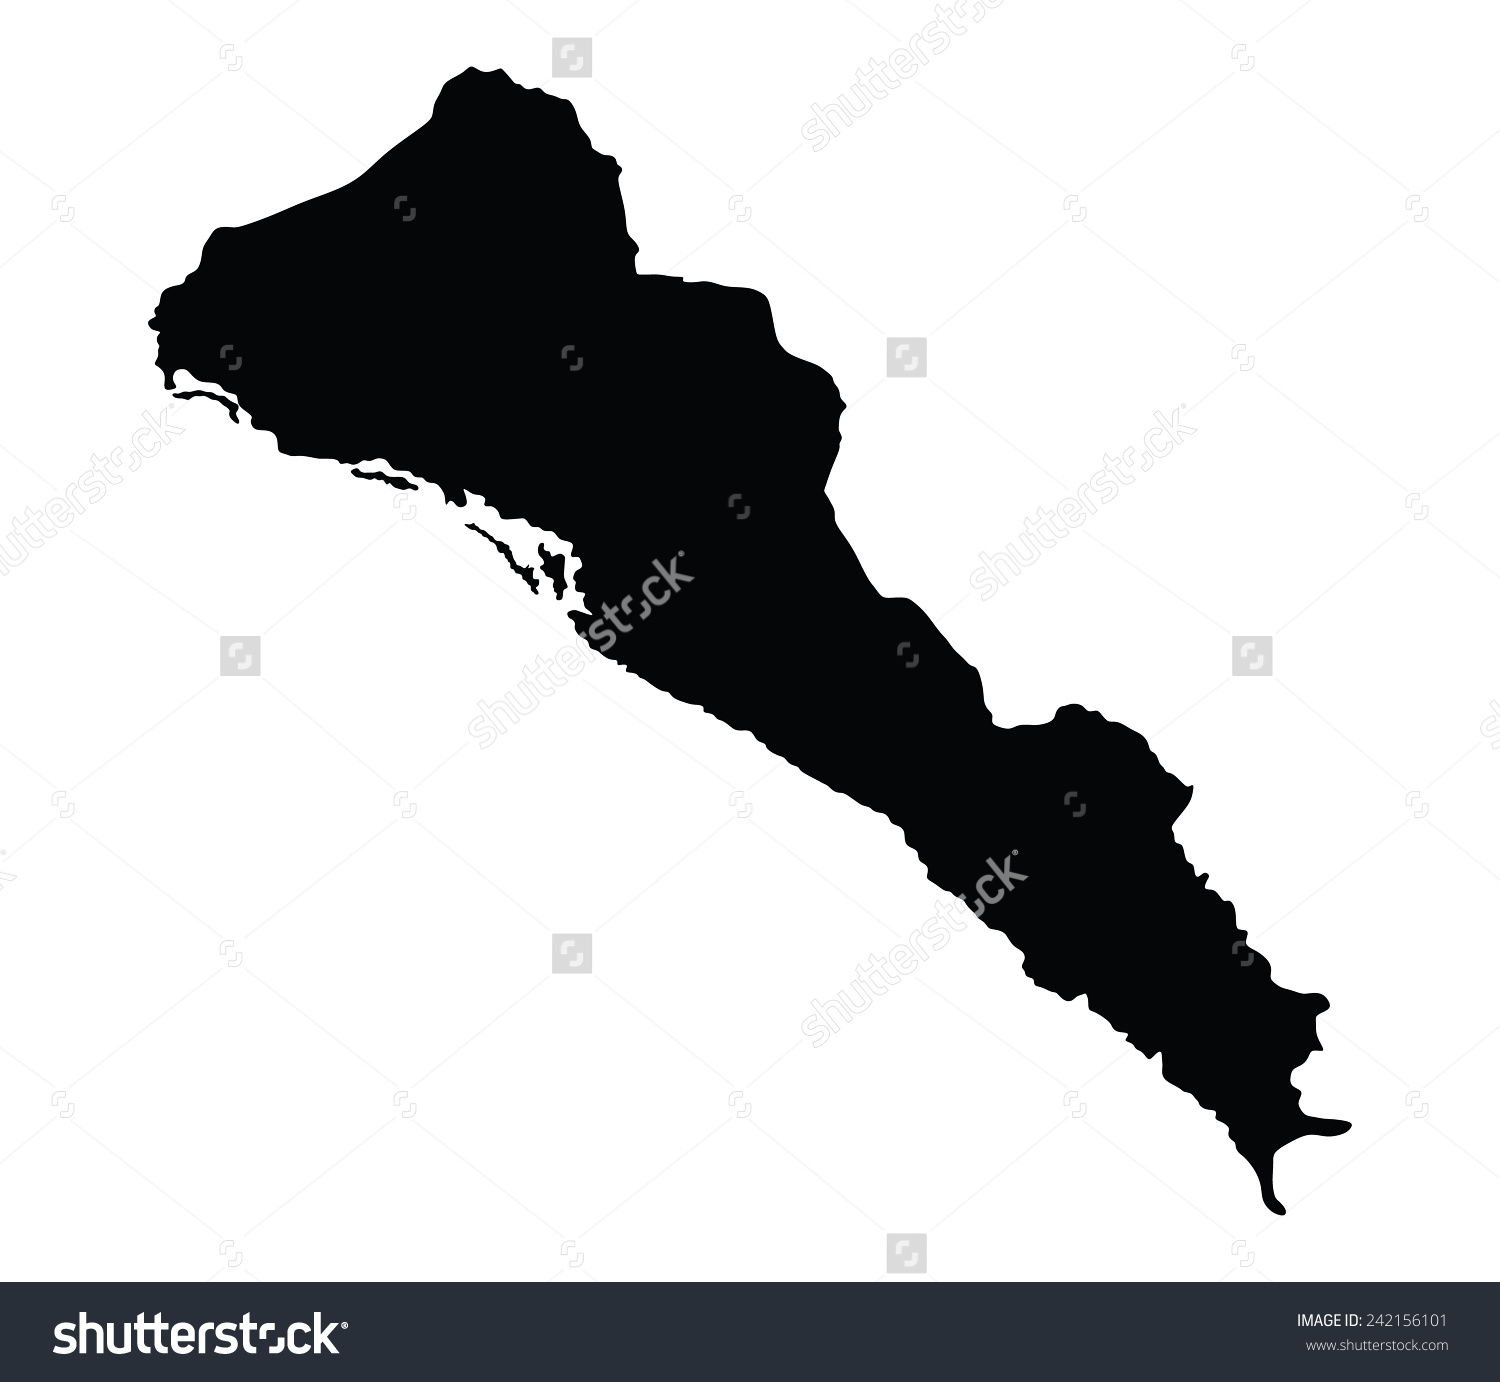 Sinaloa Mexico Vector Map Isolated On Stock Vector 242156101.